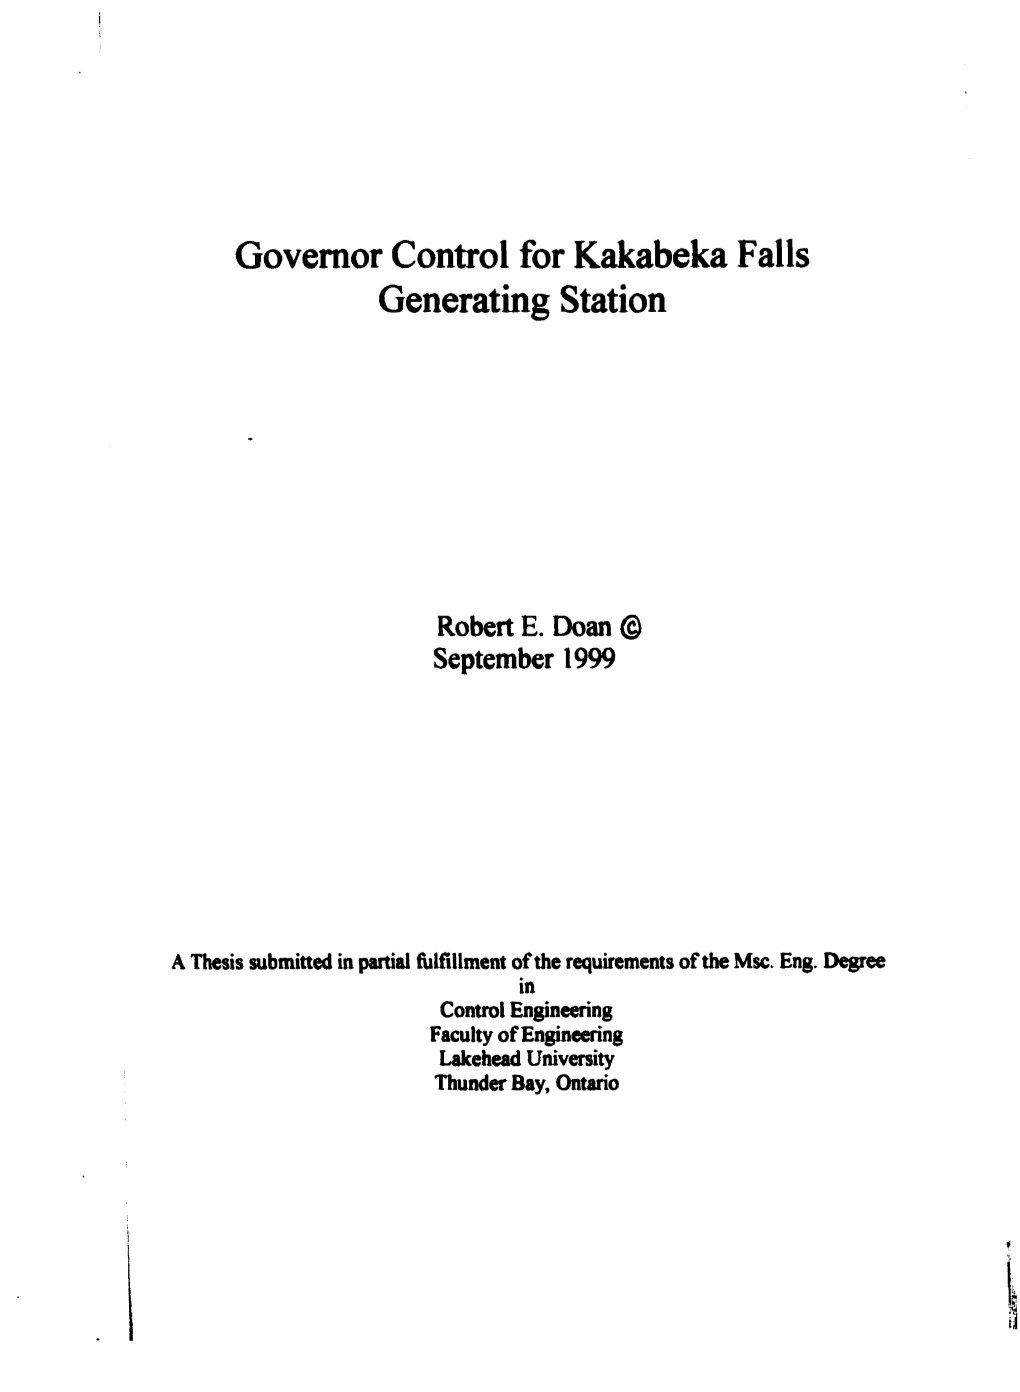 Governor Control for Kakabeka Falls Generating Station